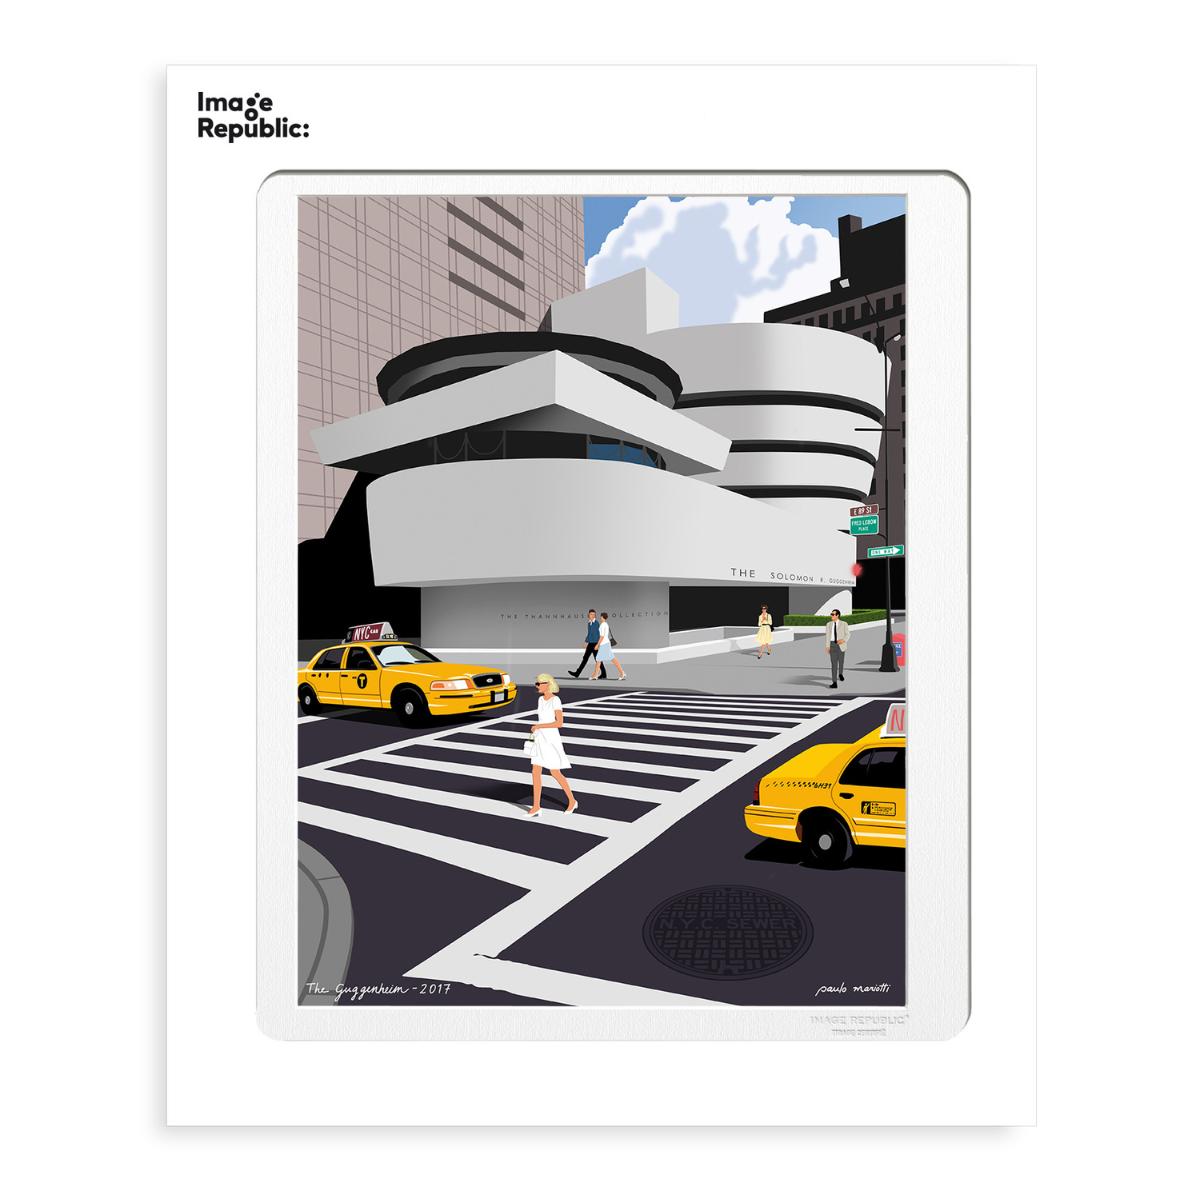 Kunstdruck "Guggenheim" by Paulo Mariotti 40x50cm